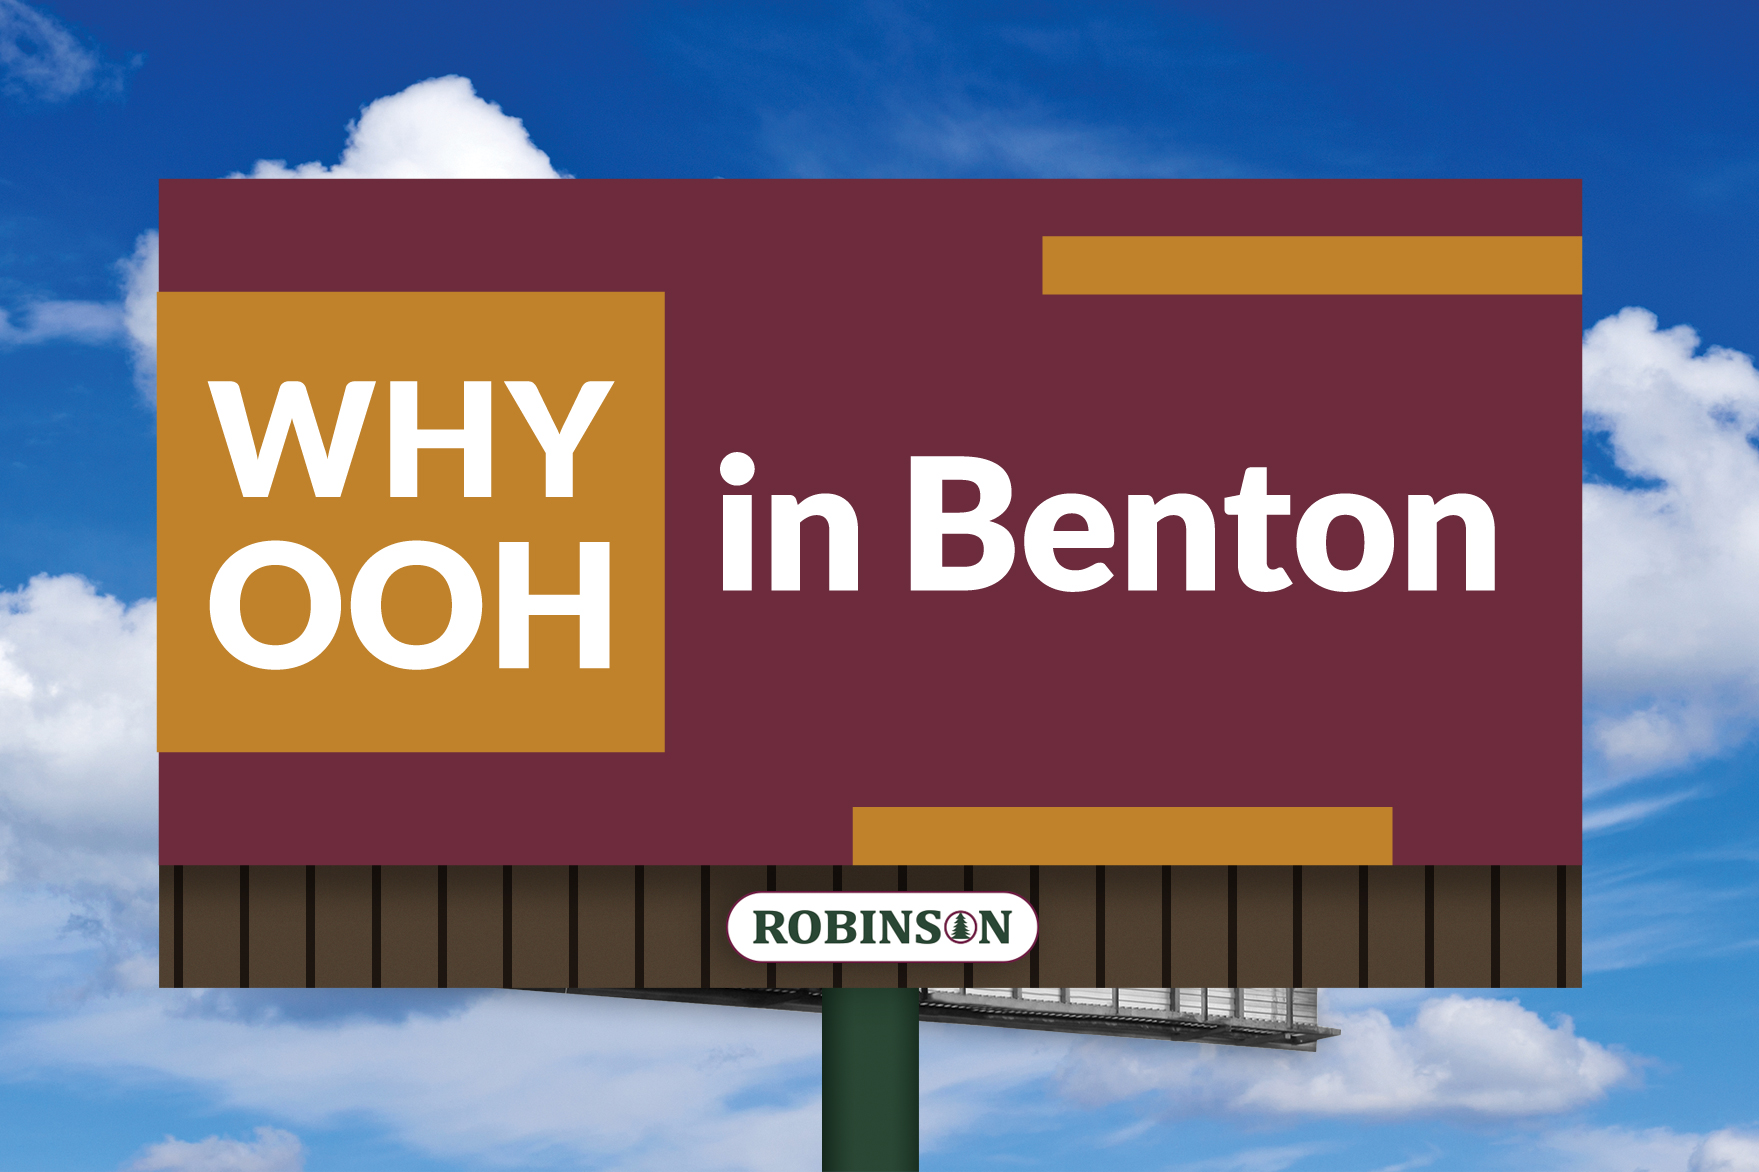 Benton, Kentucky digital billboard advertising